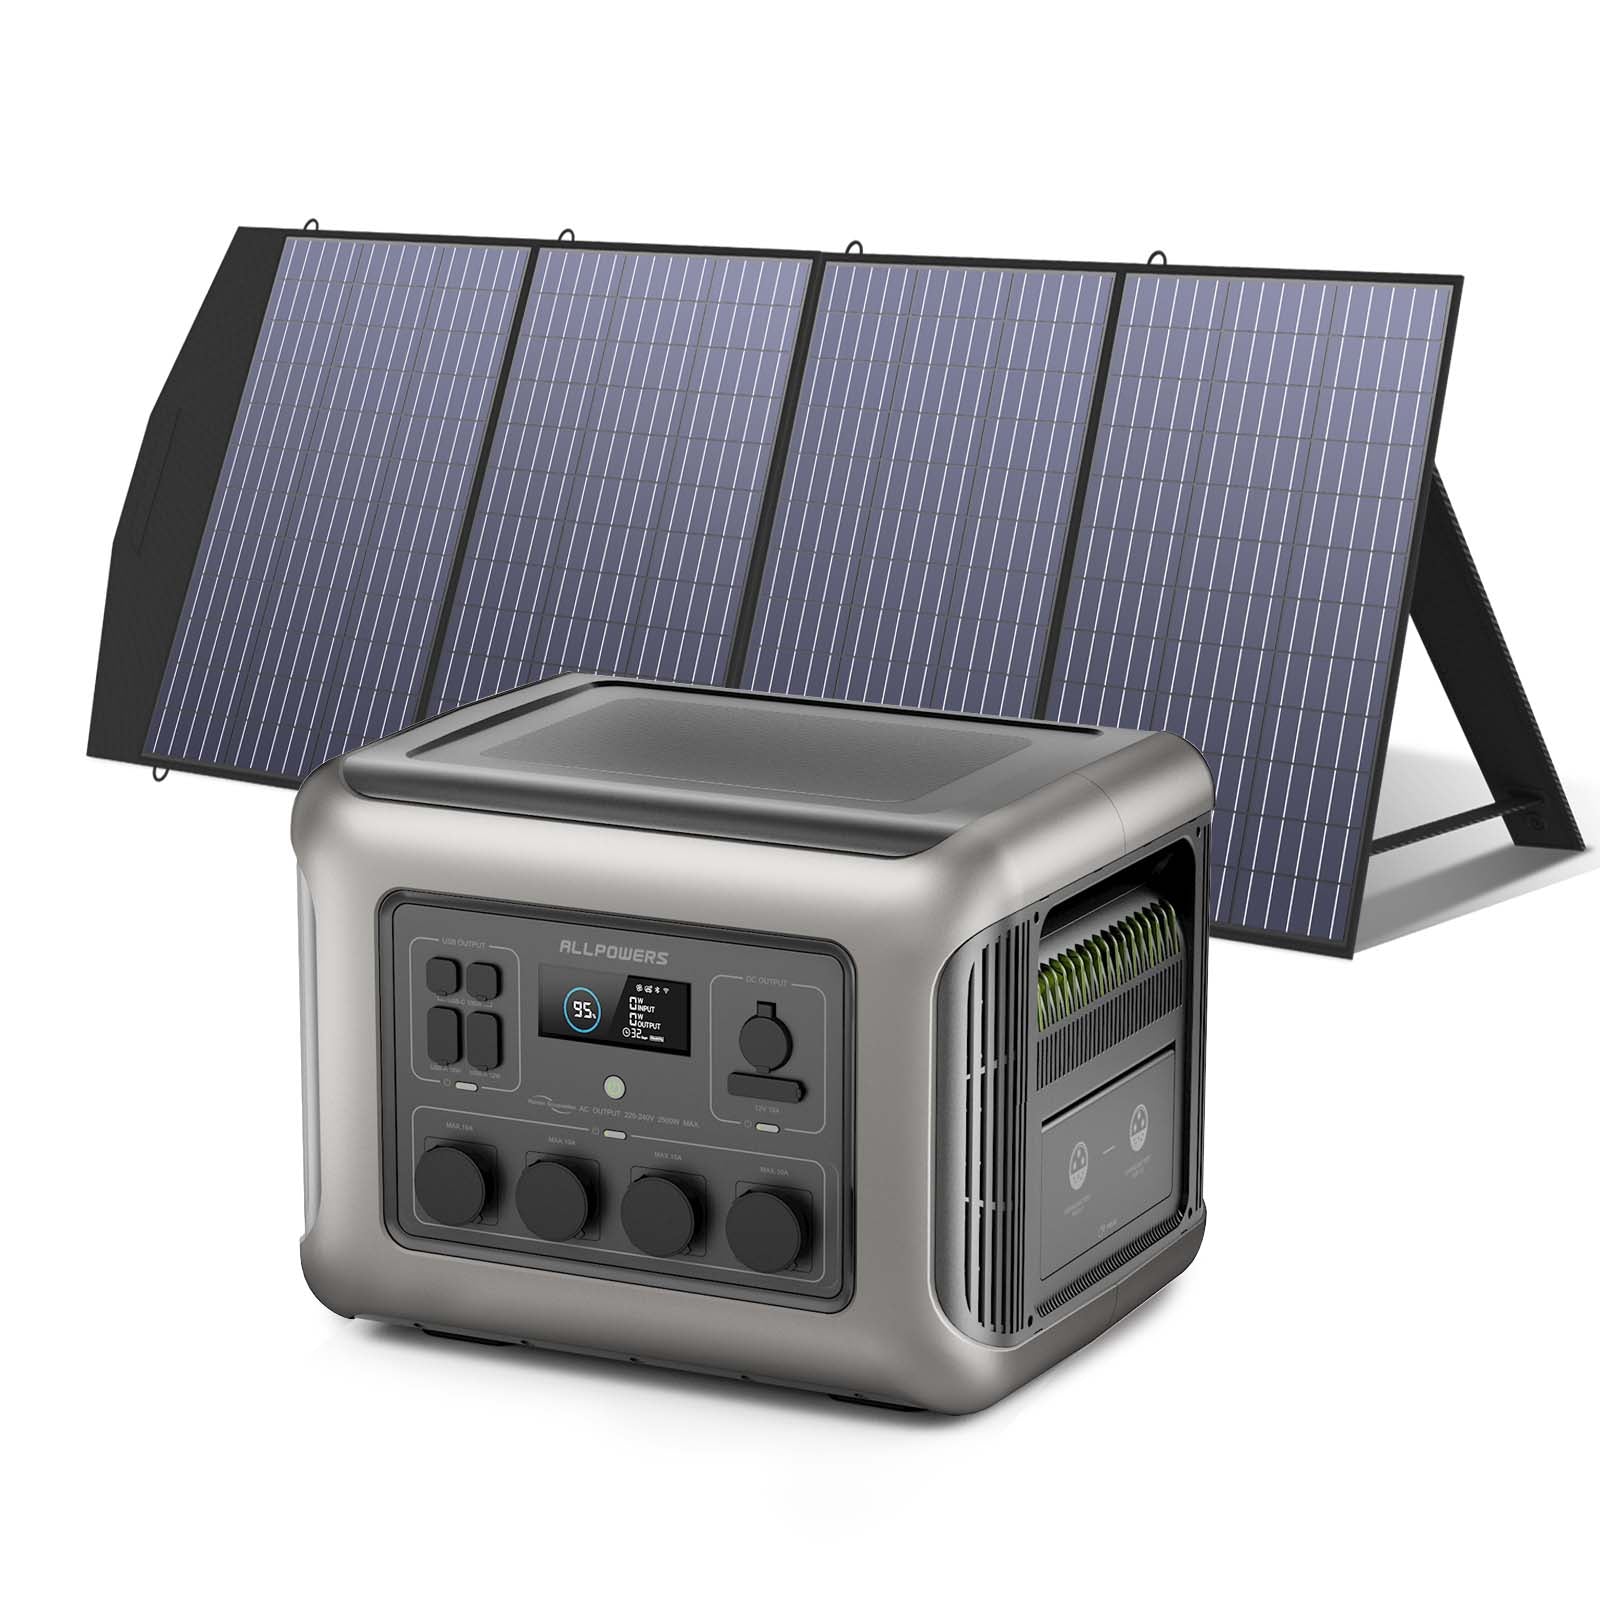 ALLPOWERS Solargenerator-Kit 2500W (R2500 + SP033 200W Solarpanel)